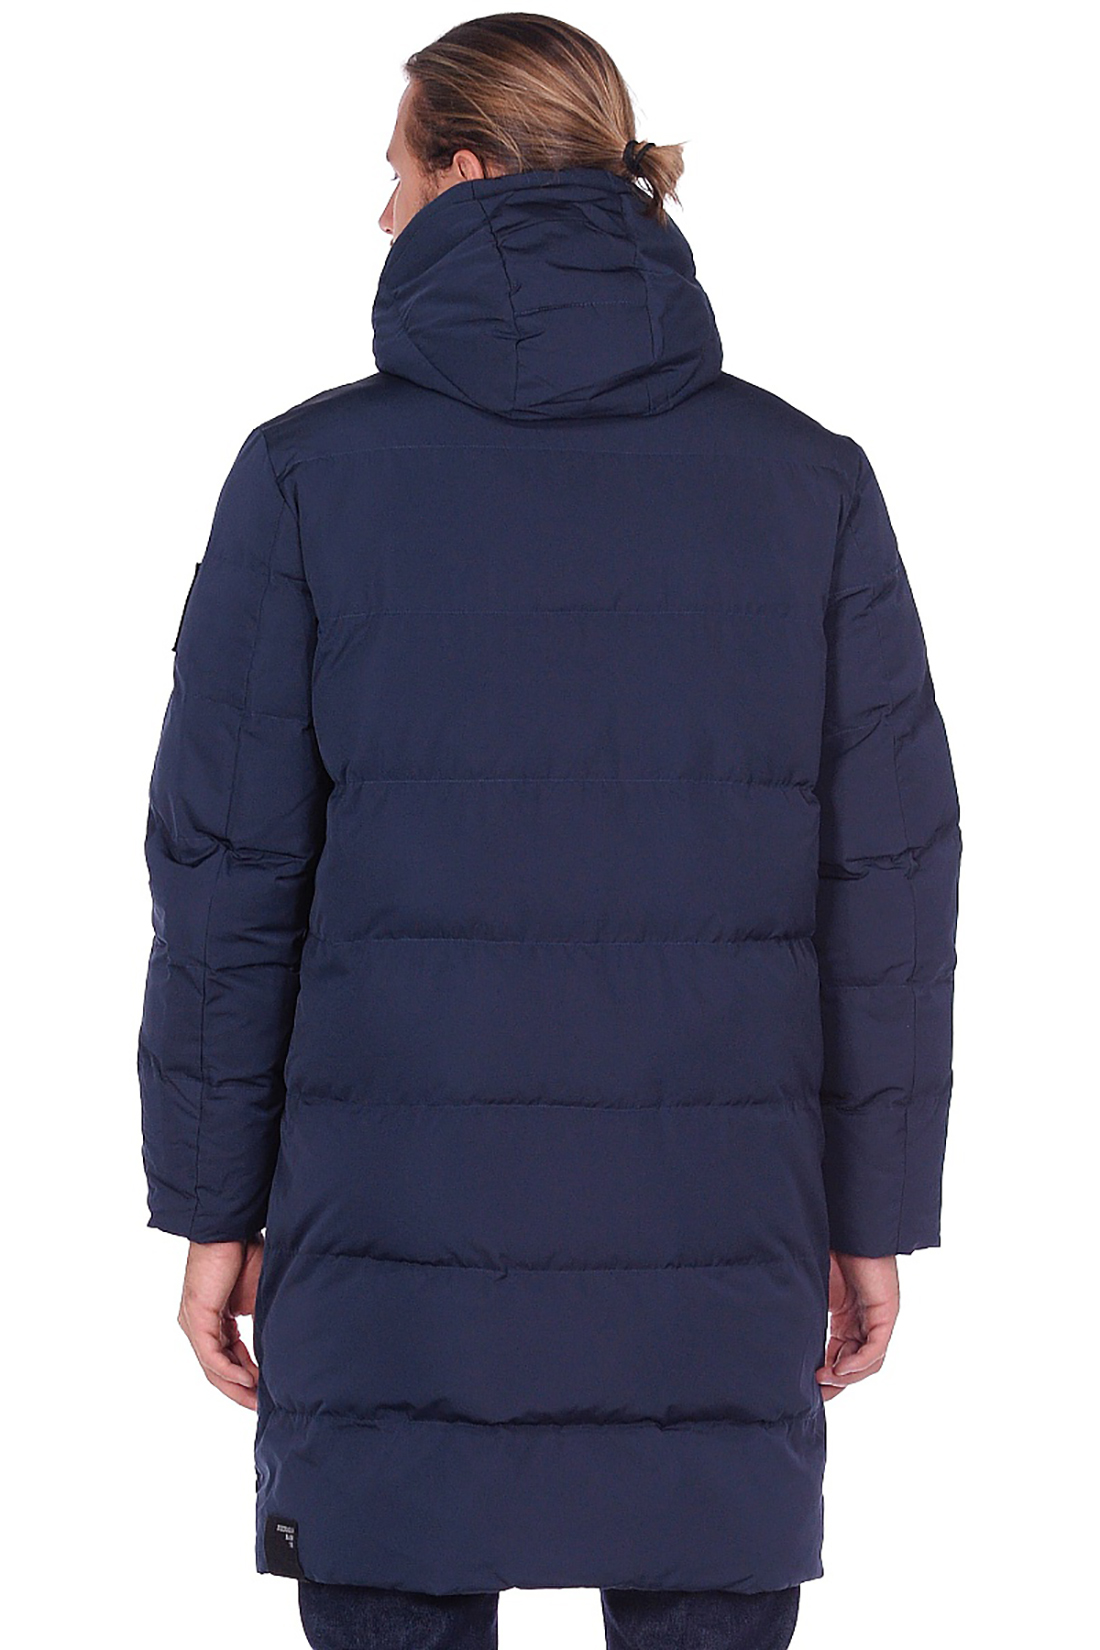 Длинная куртка с фирменными шевронами (арт. baon B539545), размер L, цвет синий Длинная куртка с фирменными шевронами (арт. baon B539545) - фото 2